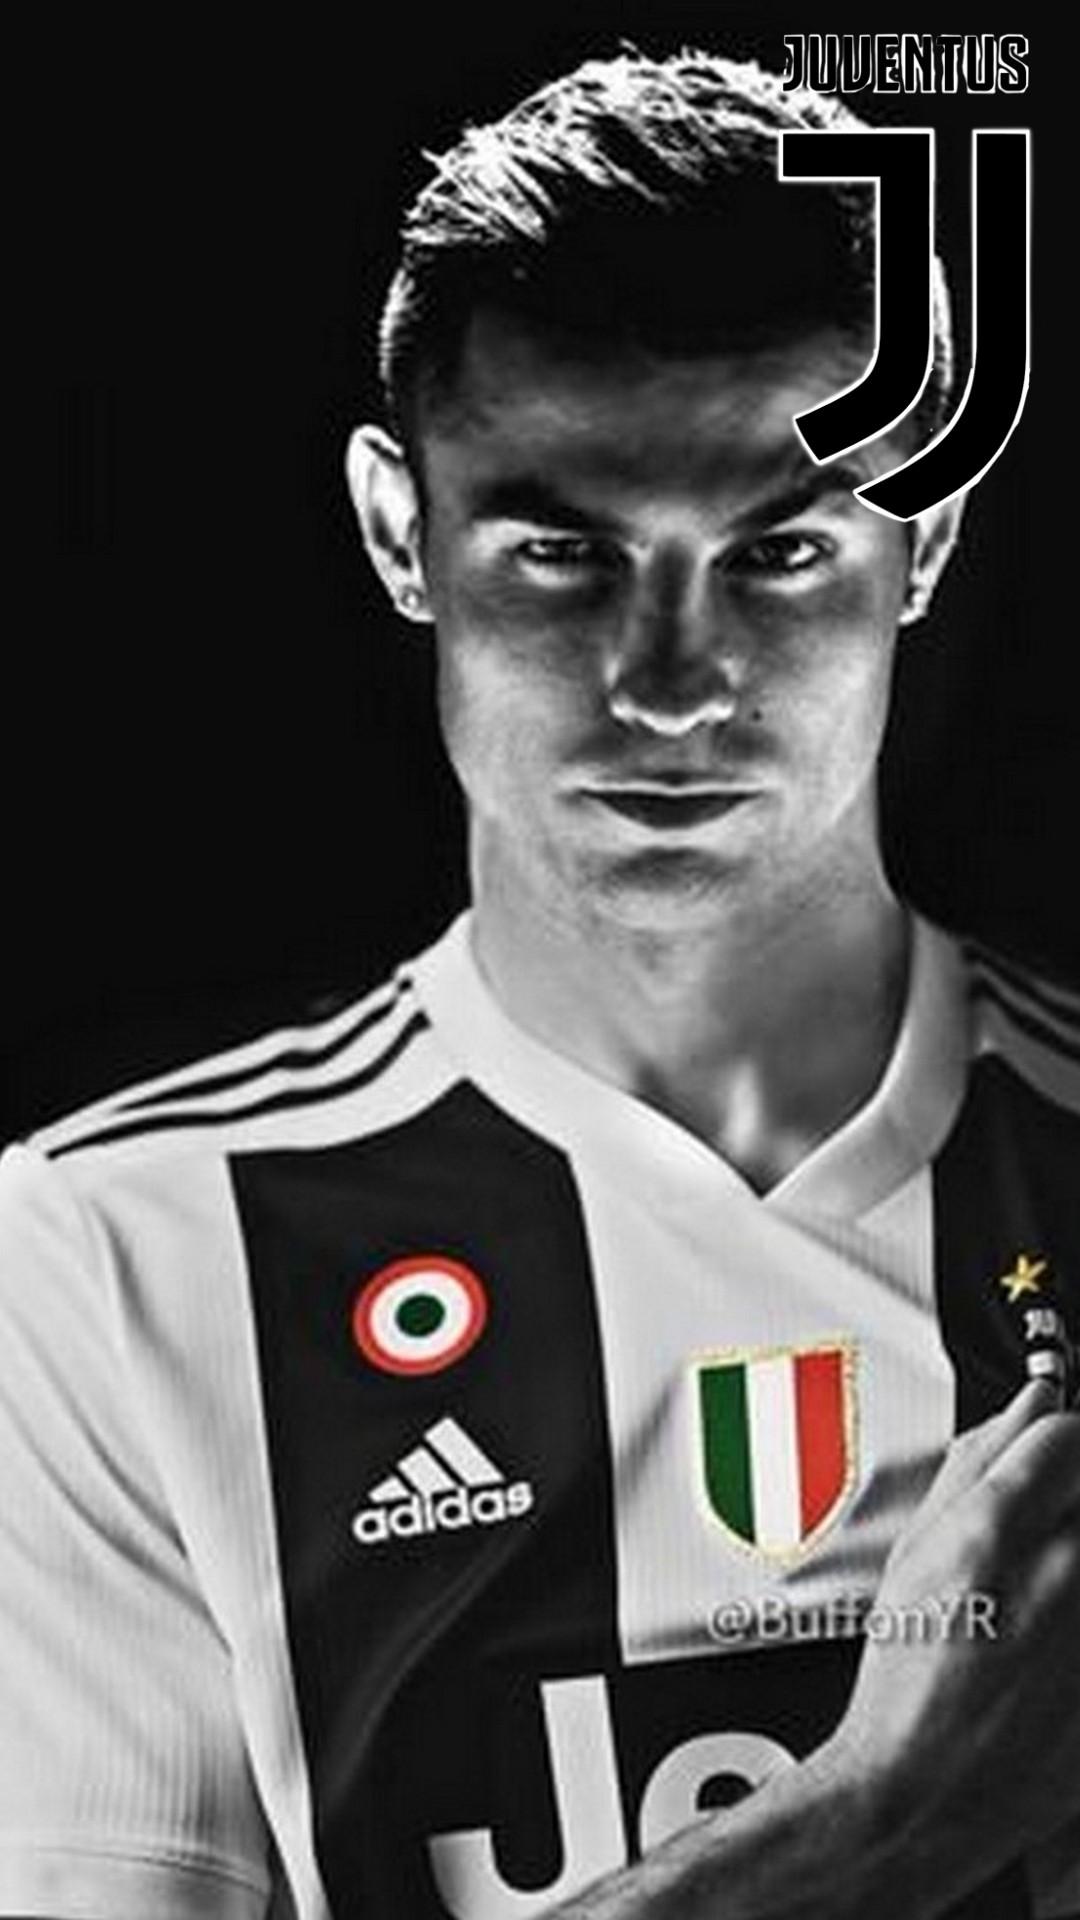 Cristiano Ronaldo Juventus iPhone X Wallpapers